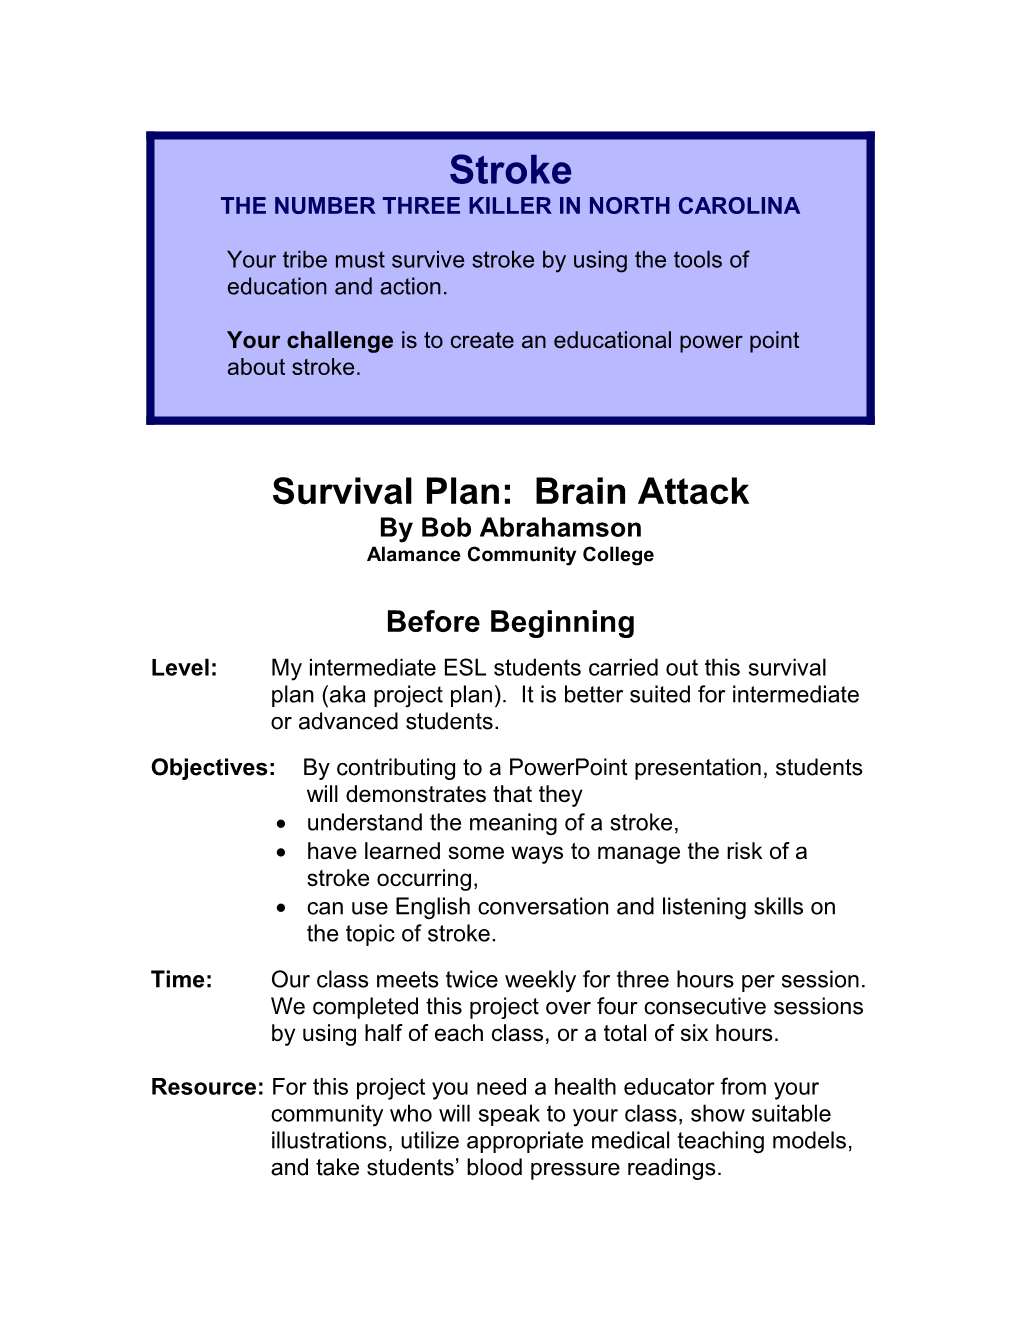 Survival Plan: Brain Attack